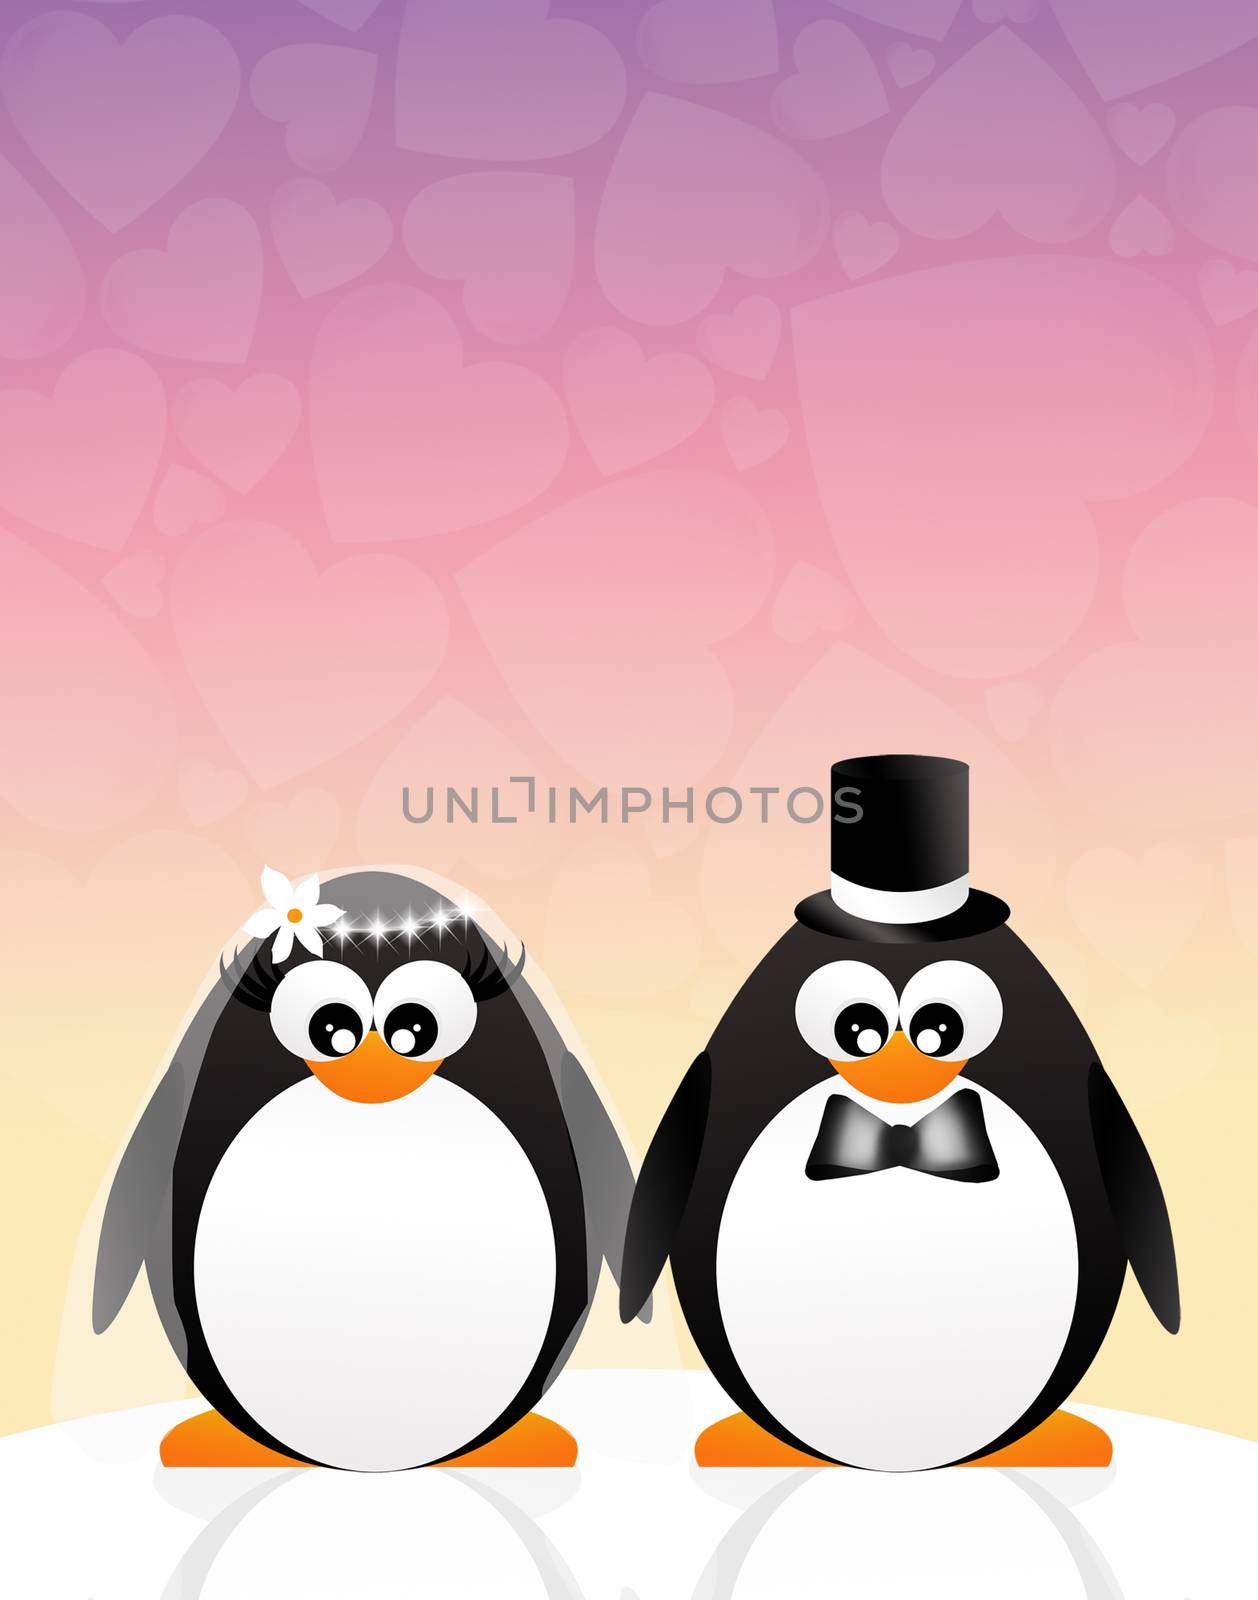 Wedding of penguins by adrenalina